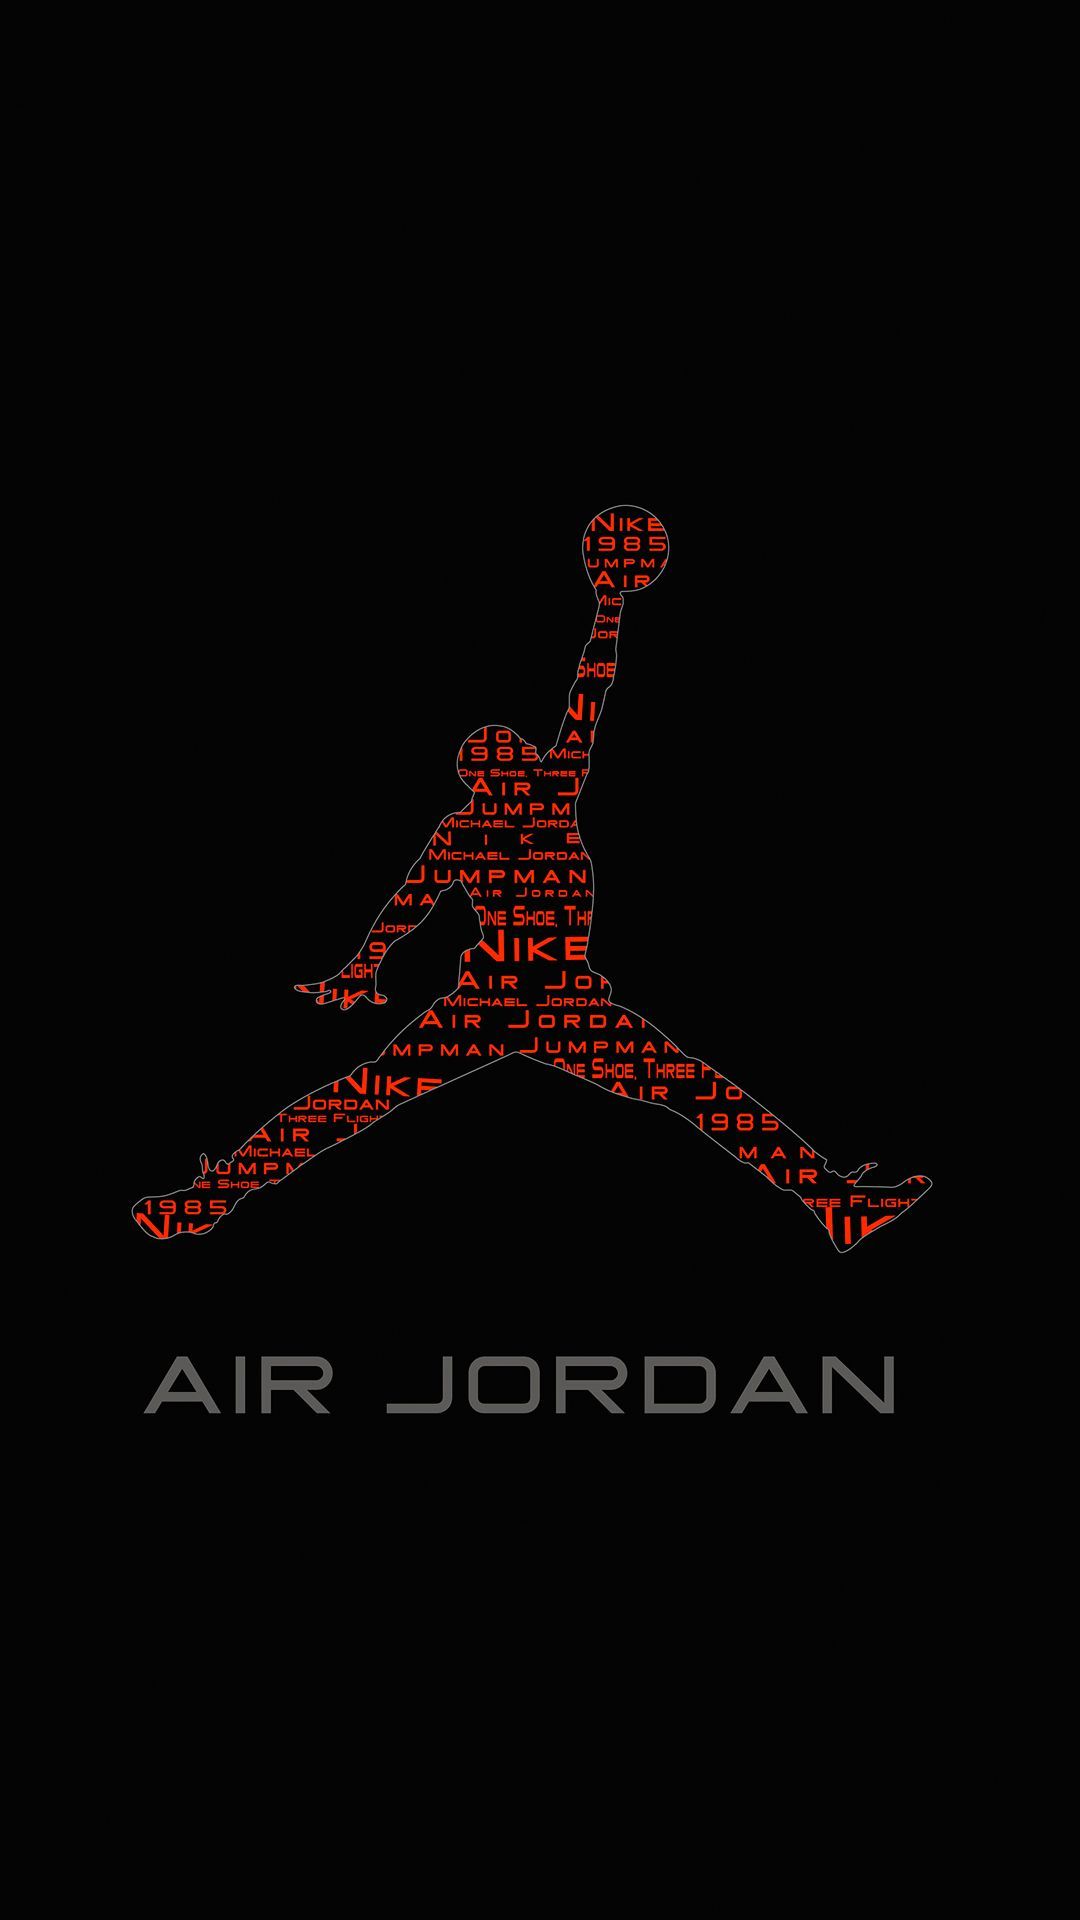 Jordan Wallpaper High Definition Hupages Download iPhone Wallpaper. Jordan logo wallpaper, Air jordans, Nike wallpaper